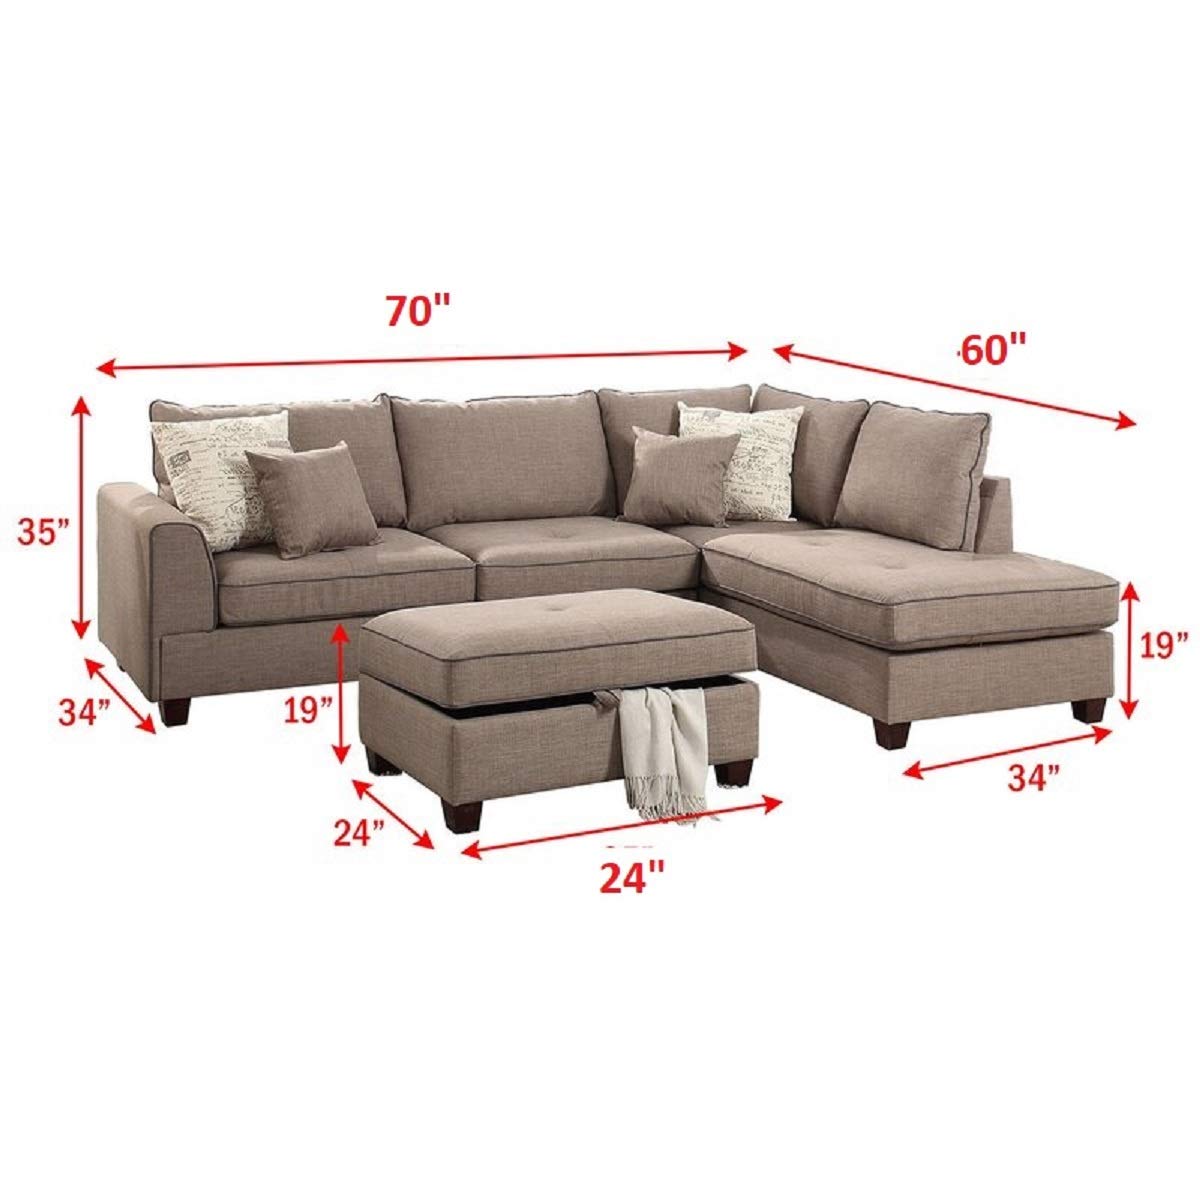 Designer Sofa Set:- Ray L shape 5 Seater Fabric Luxury Furniture Sofa Set